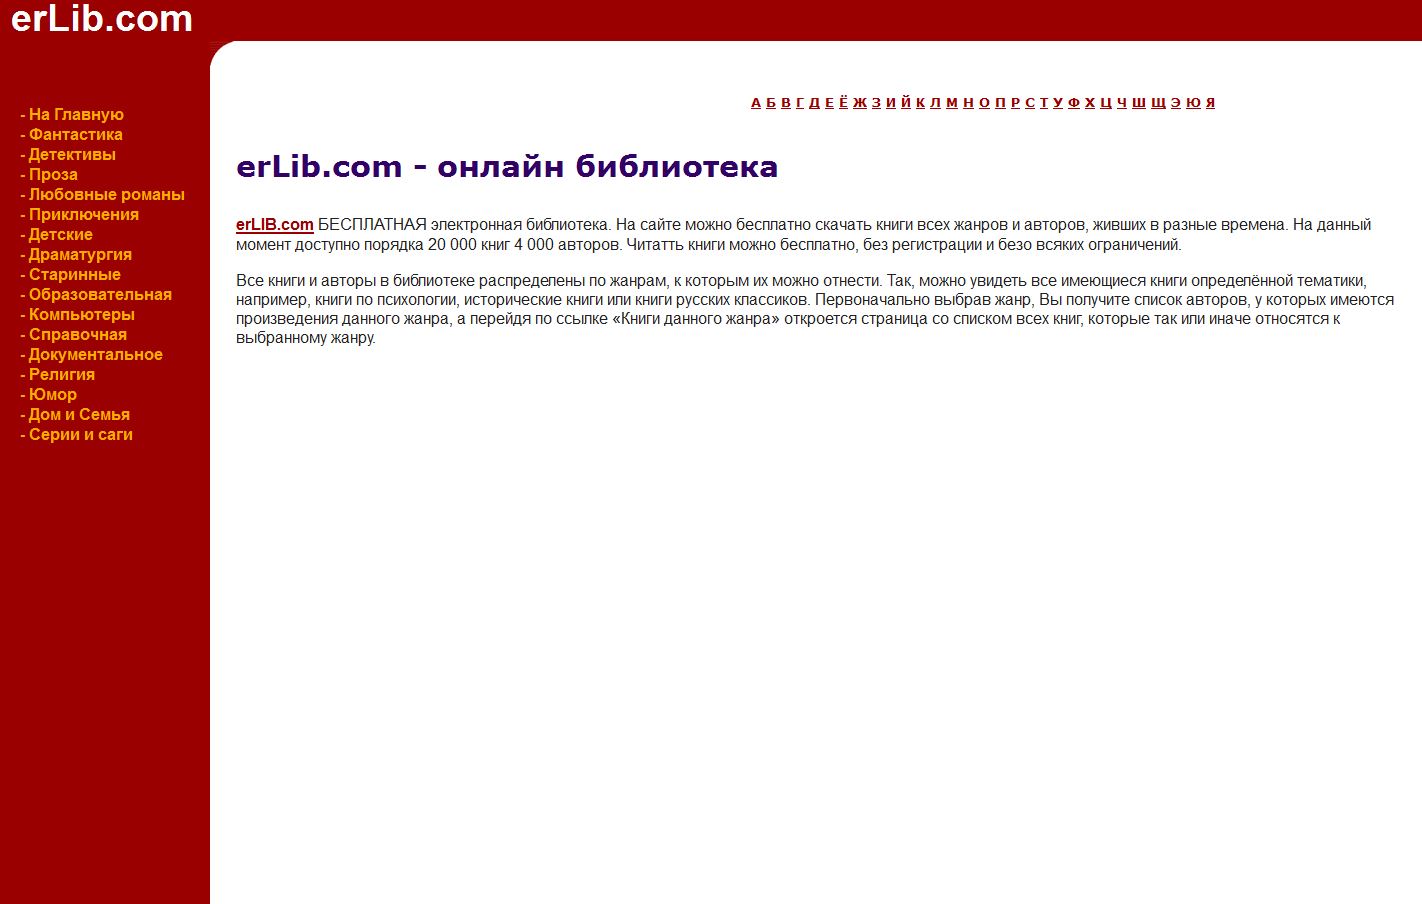 Сайт онлайн-библиотеки erLib